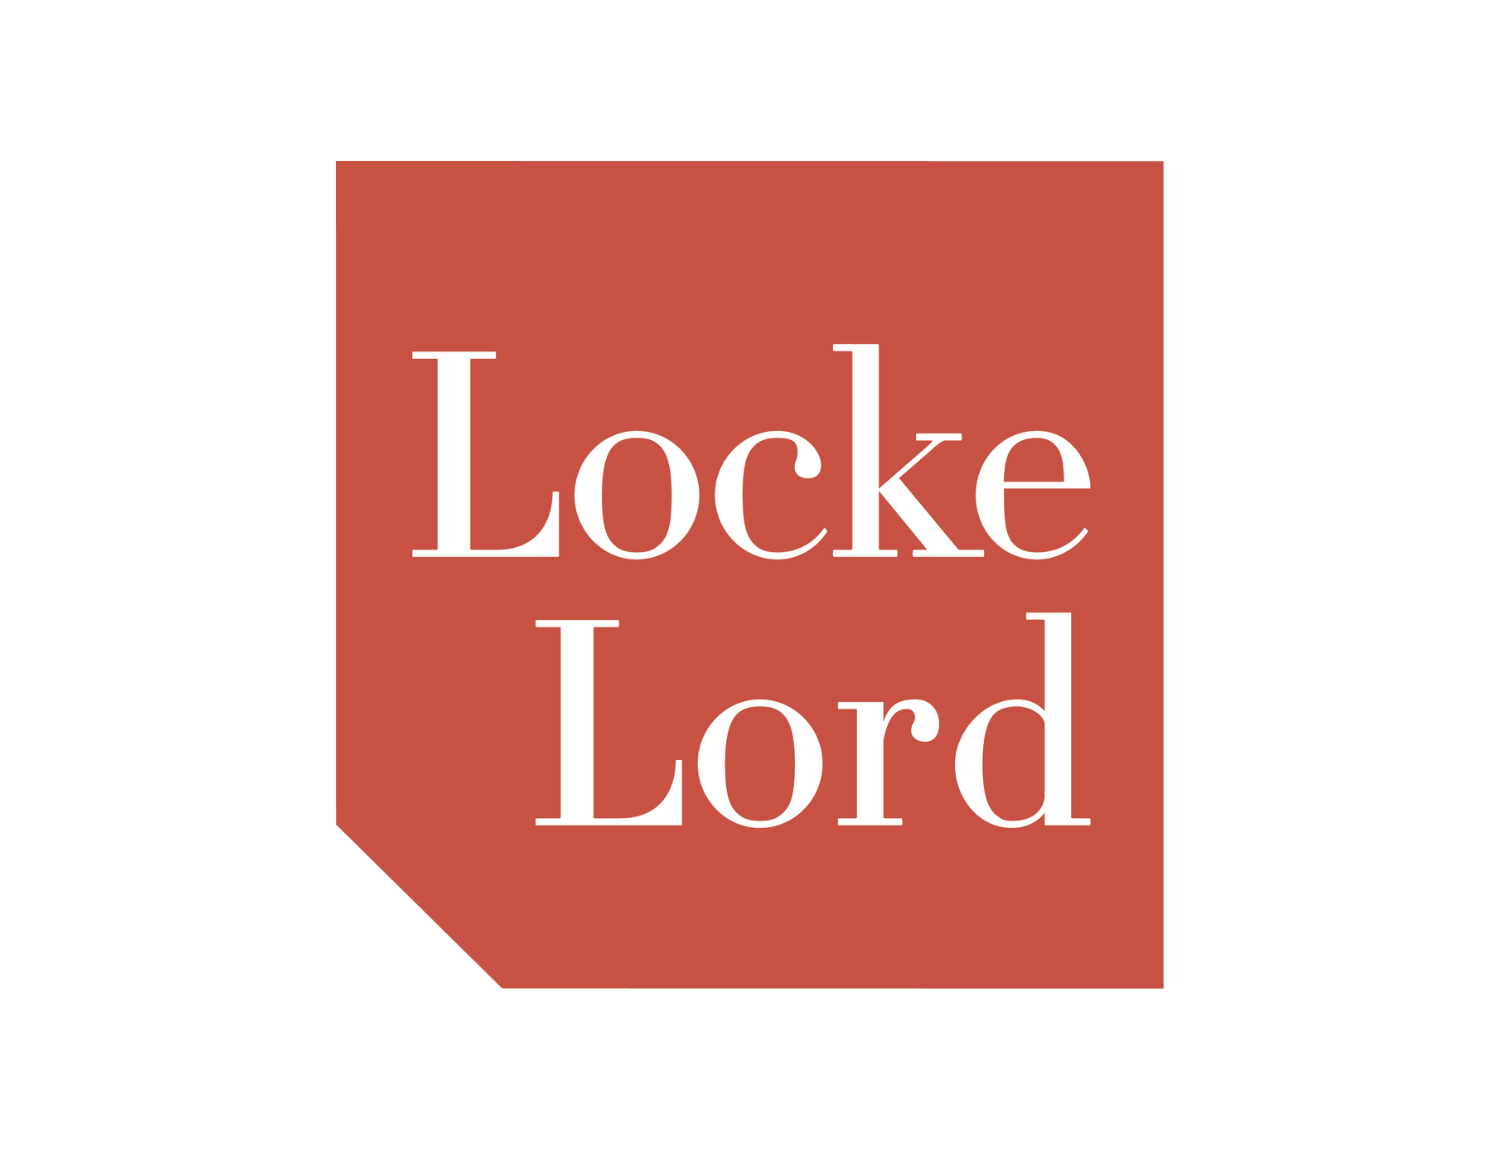 Locke Lord LLP logo